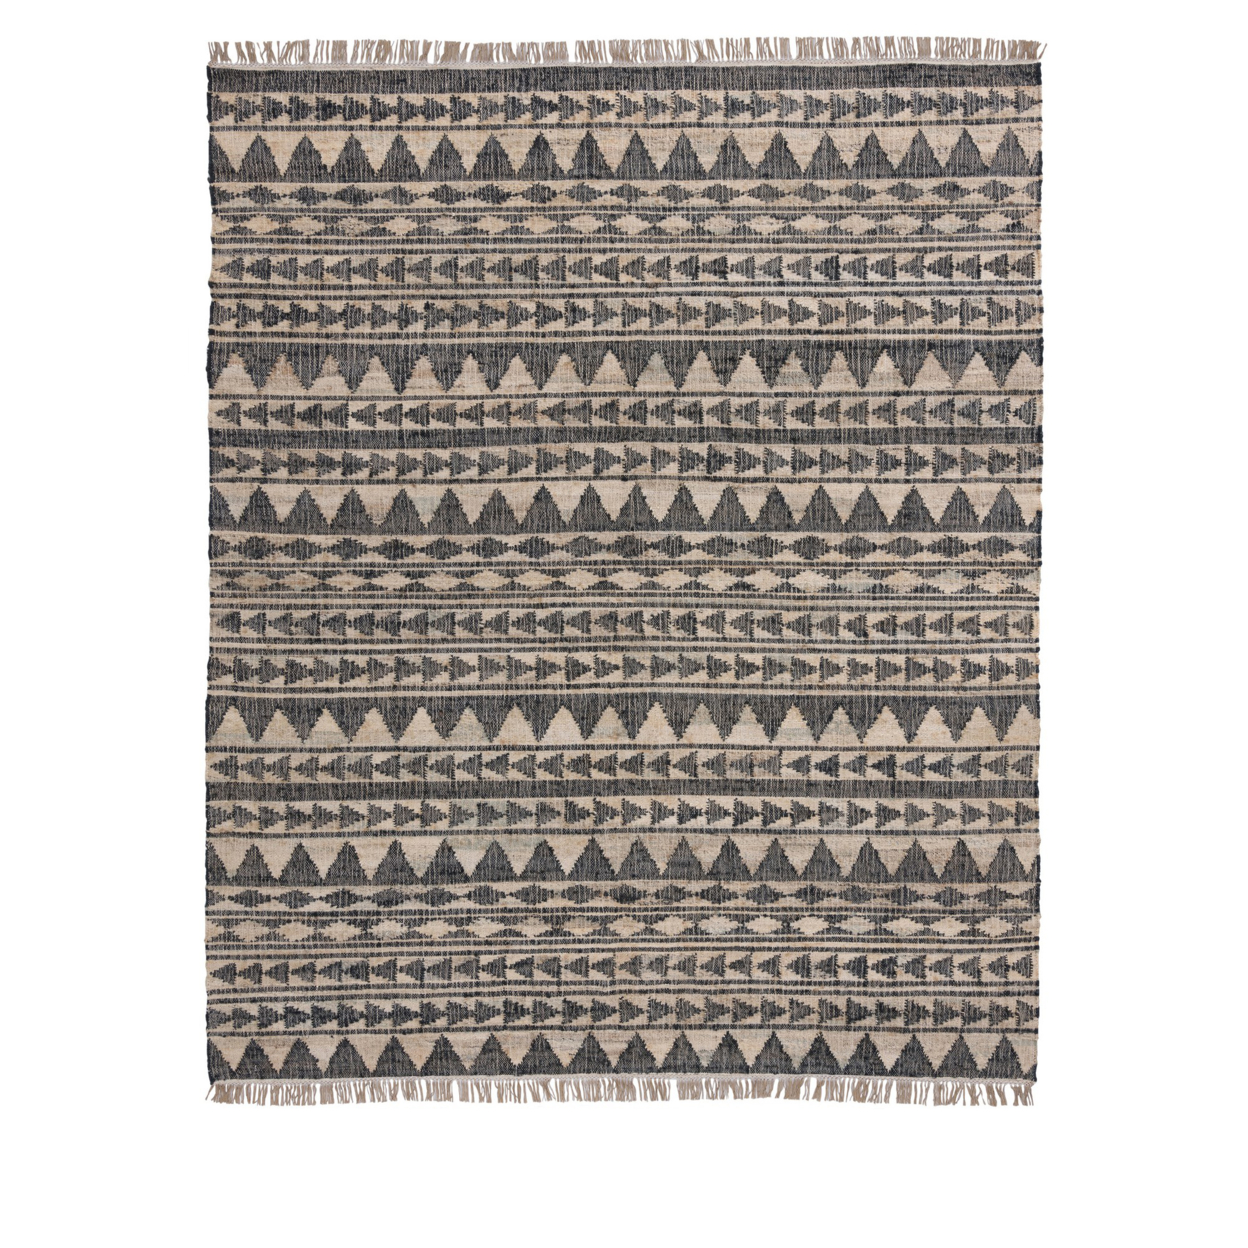 Moly 10 X 8 Tassel Area Rug, Tribal Triangle Pattern, Black Handwoven Jute - Saltoro Sherpi